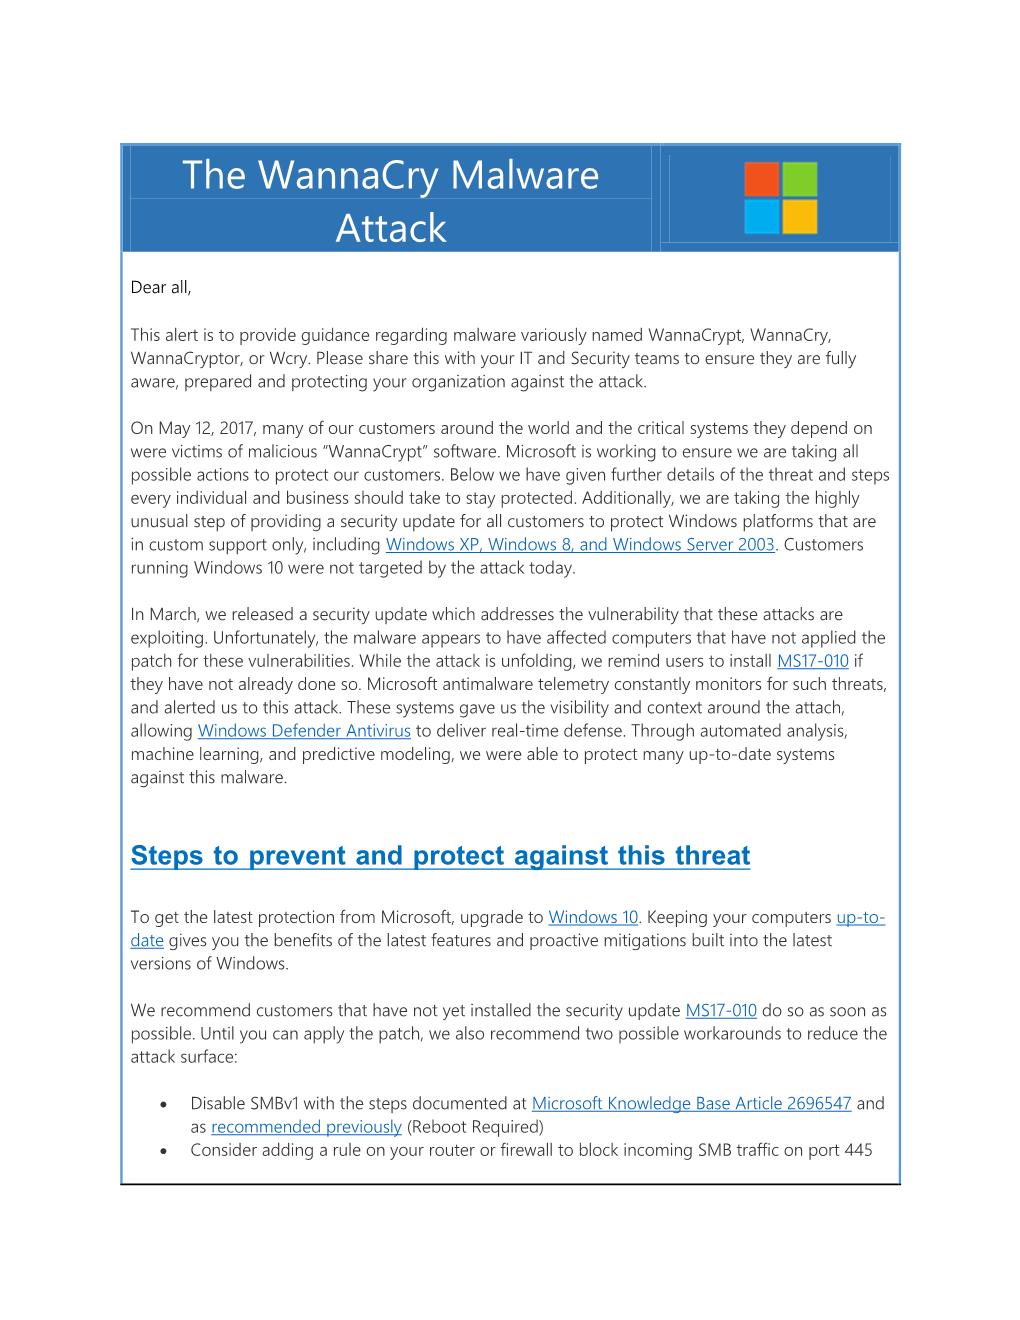 The Wannacry Malware Attack